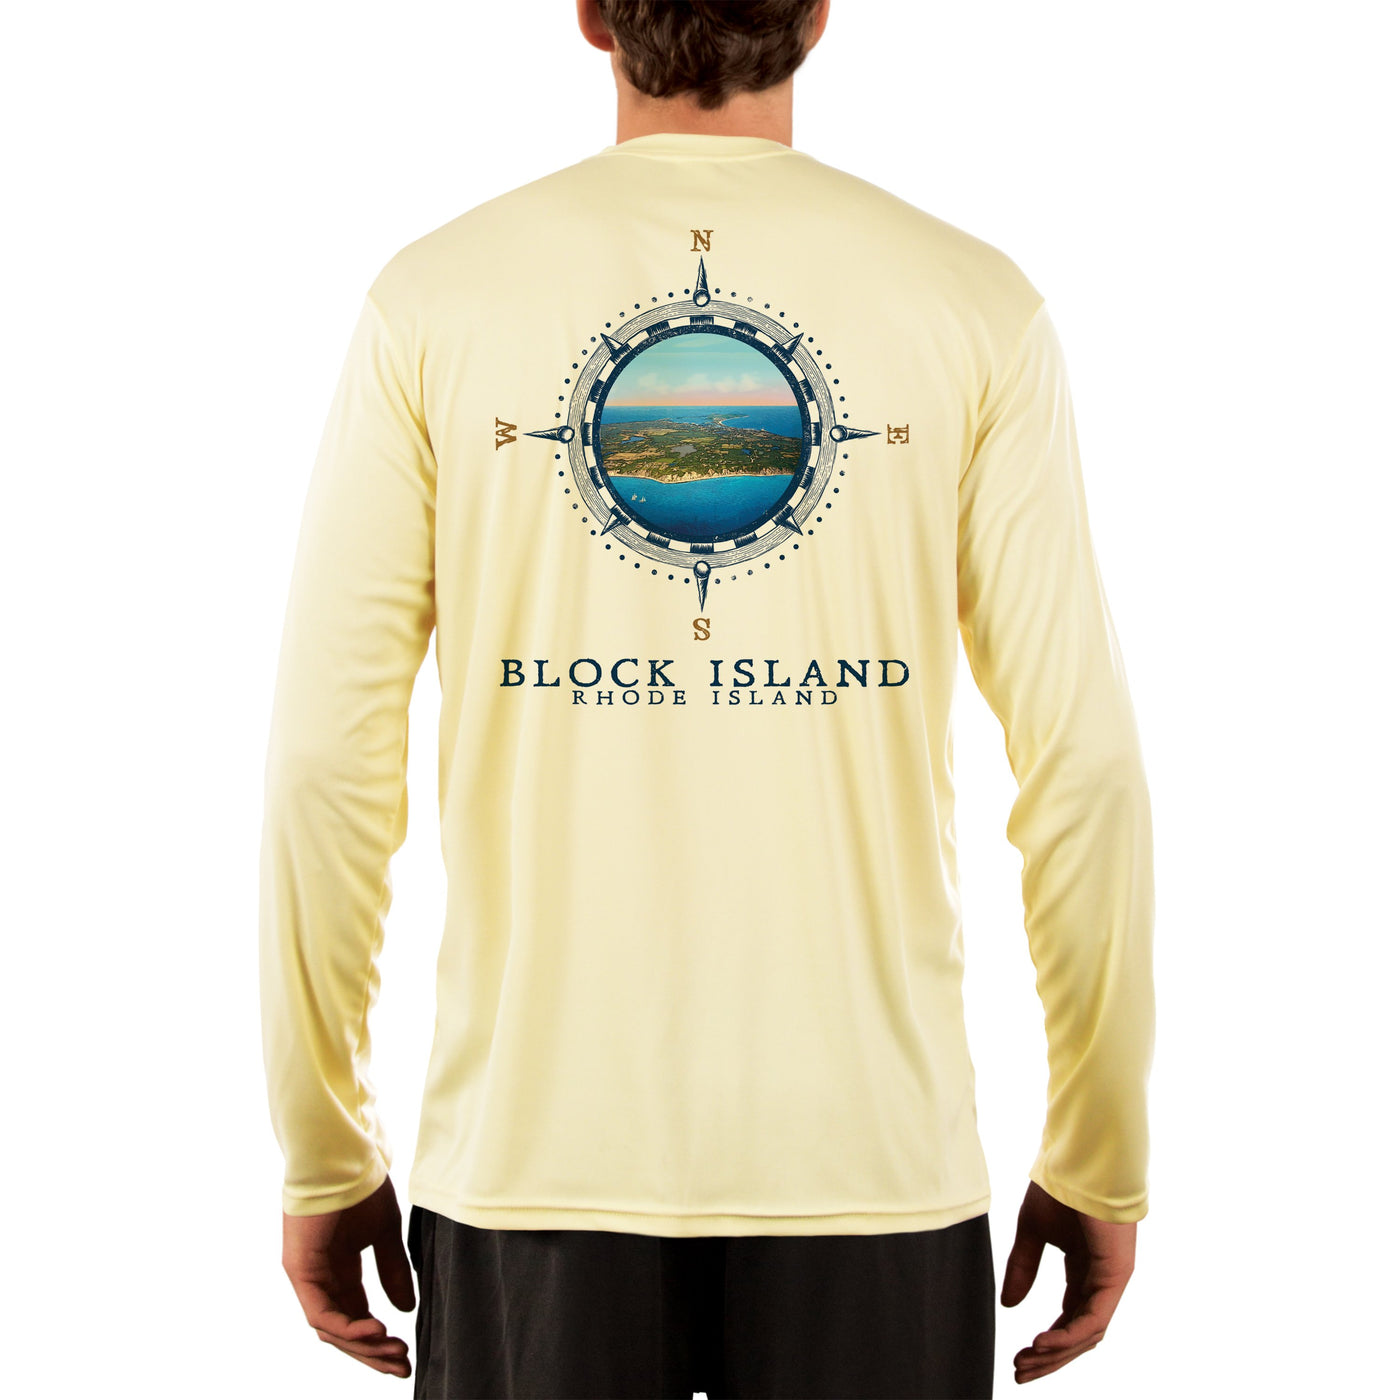 Compass Vintage Block Island Men's UPF 50+ Long Sleeve T-Shirt